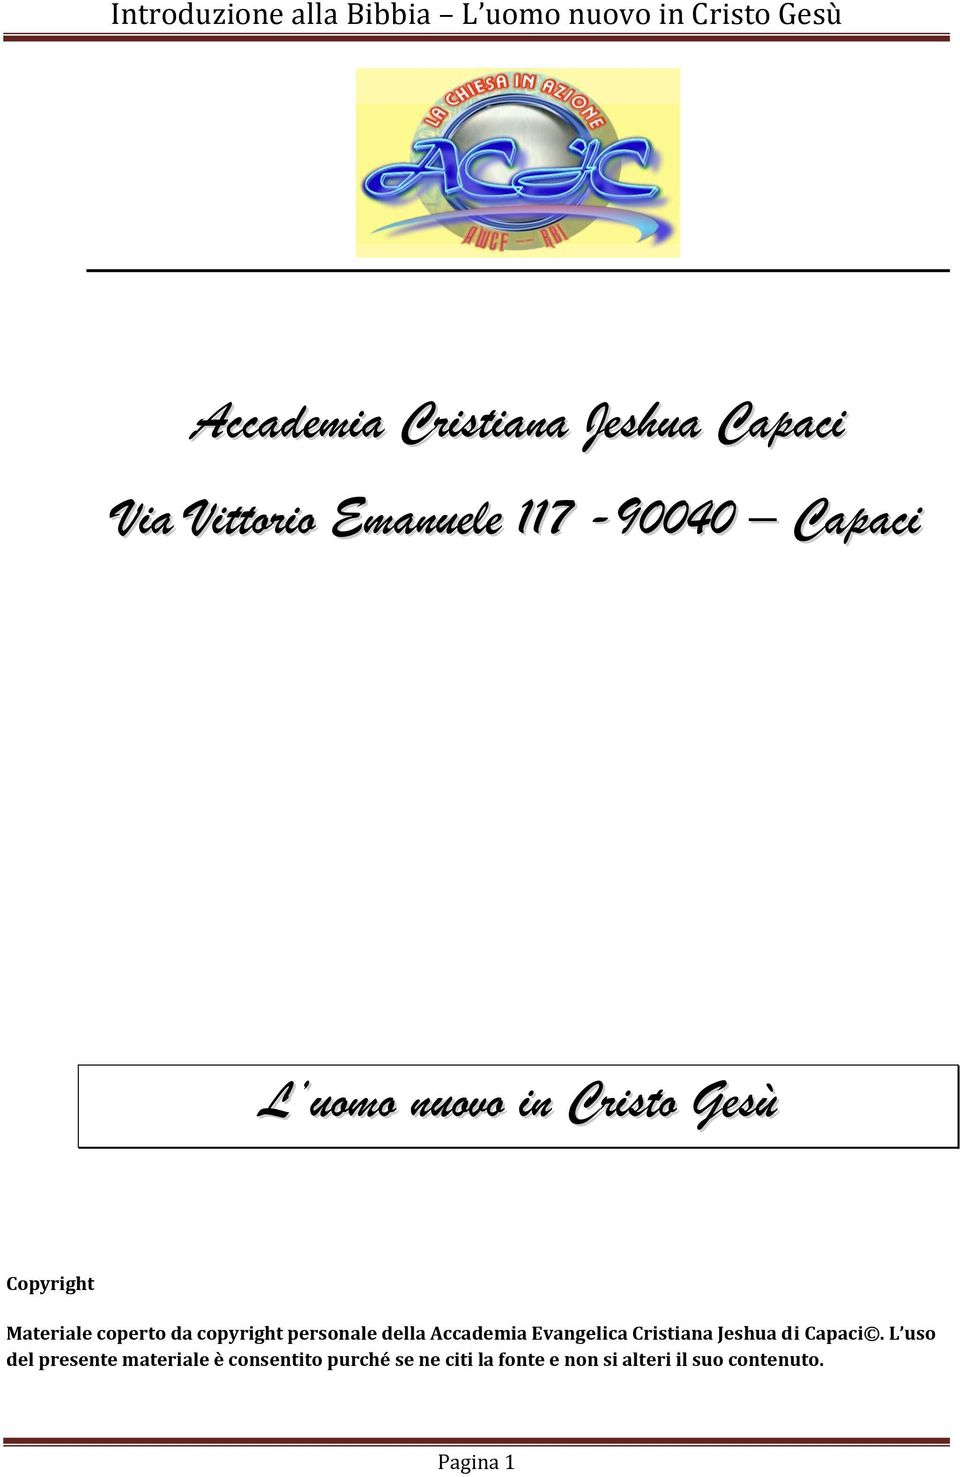 Accademia Evangelica Cristiana Jeshua di Capaci.